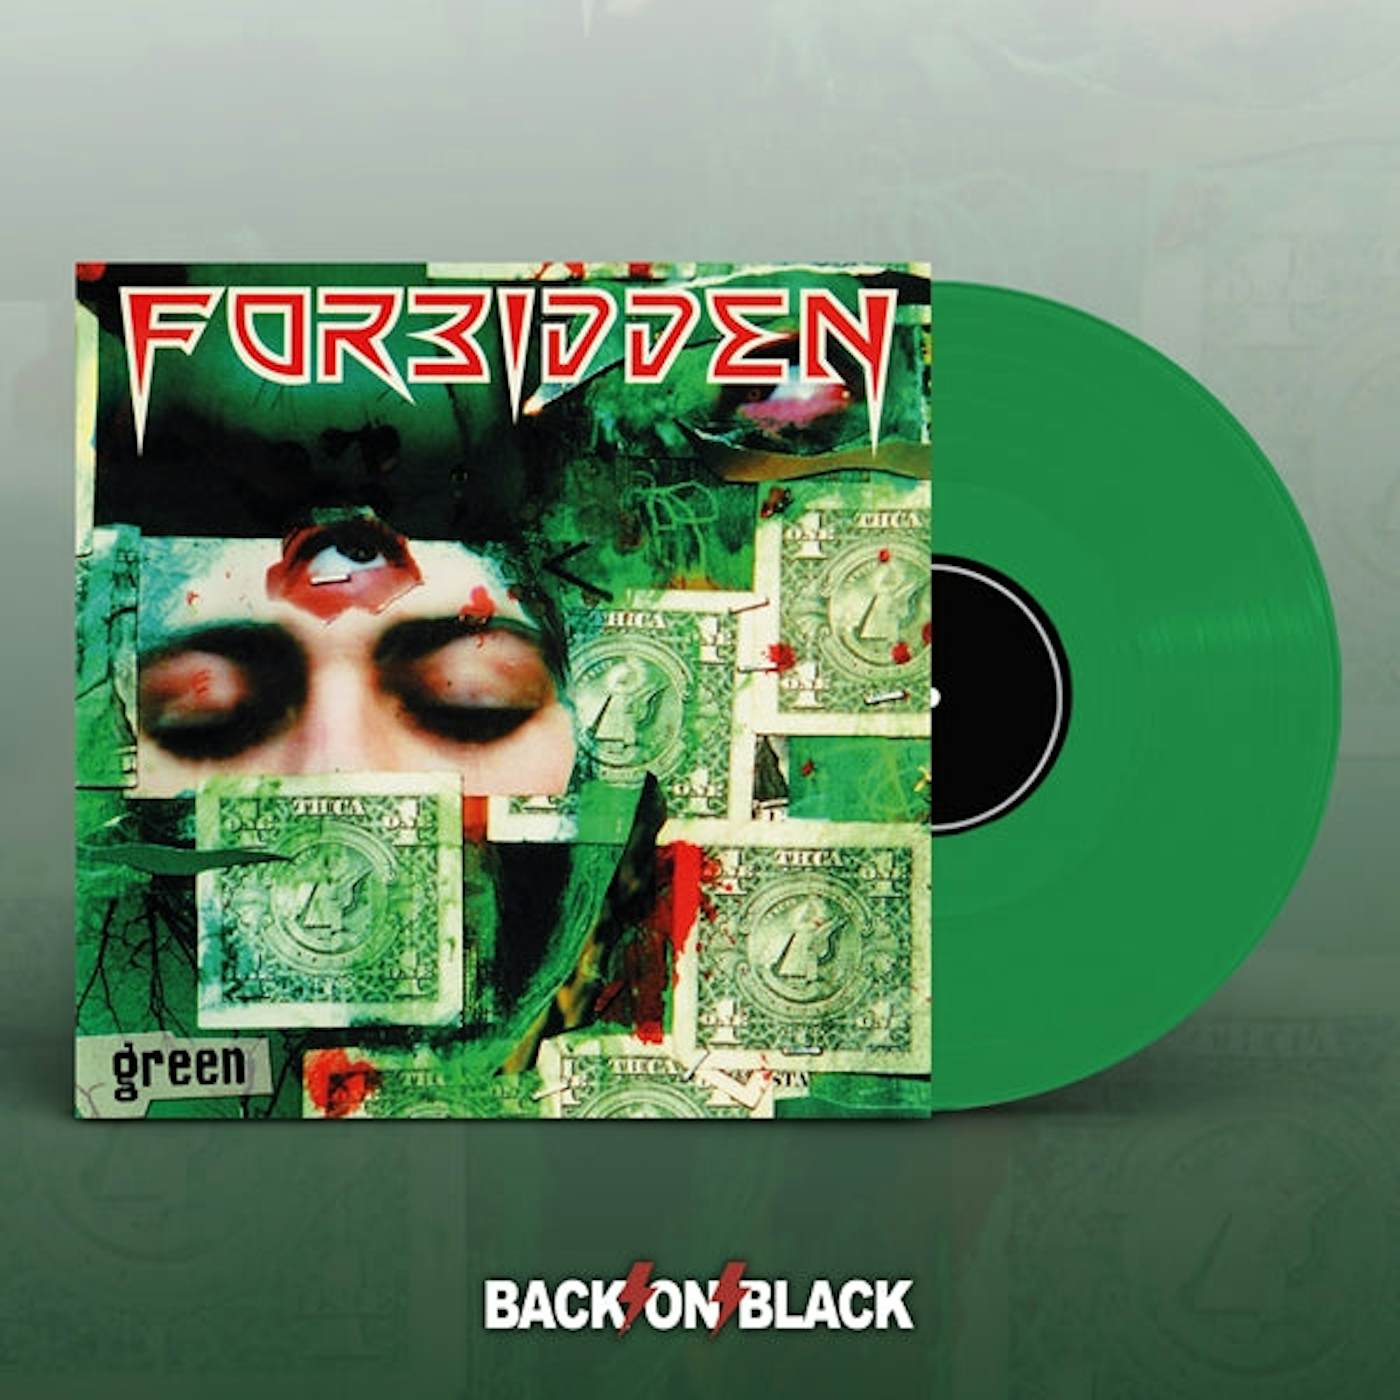 Forbidden LP - Green (Green Vinyl)